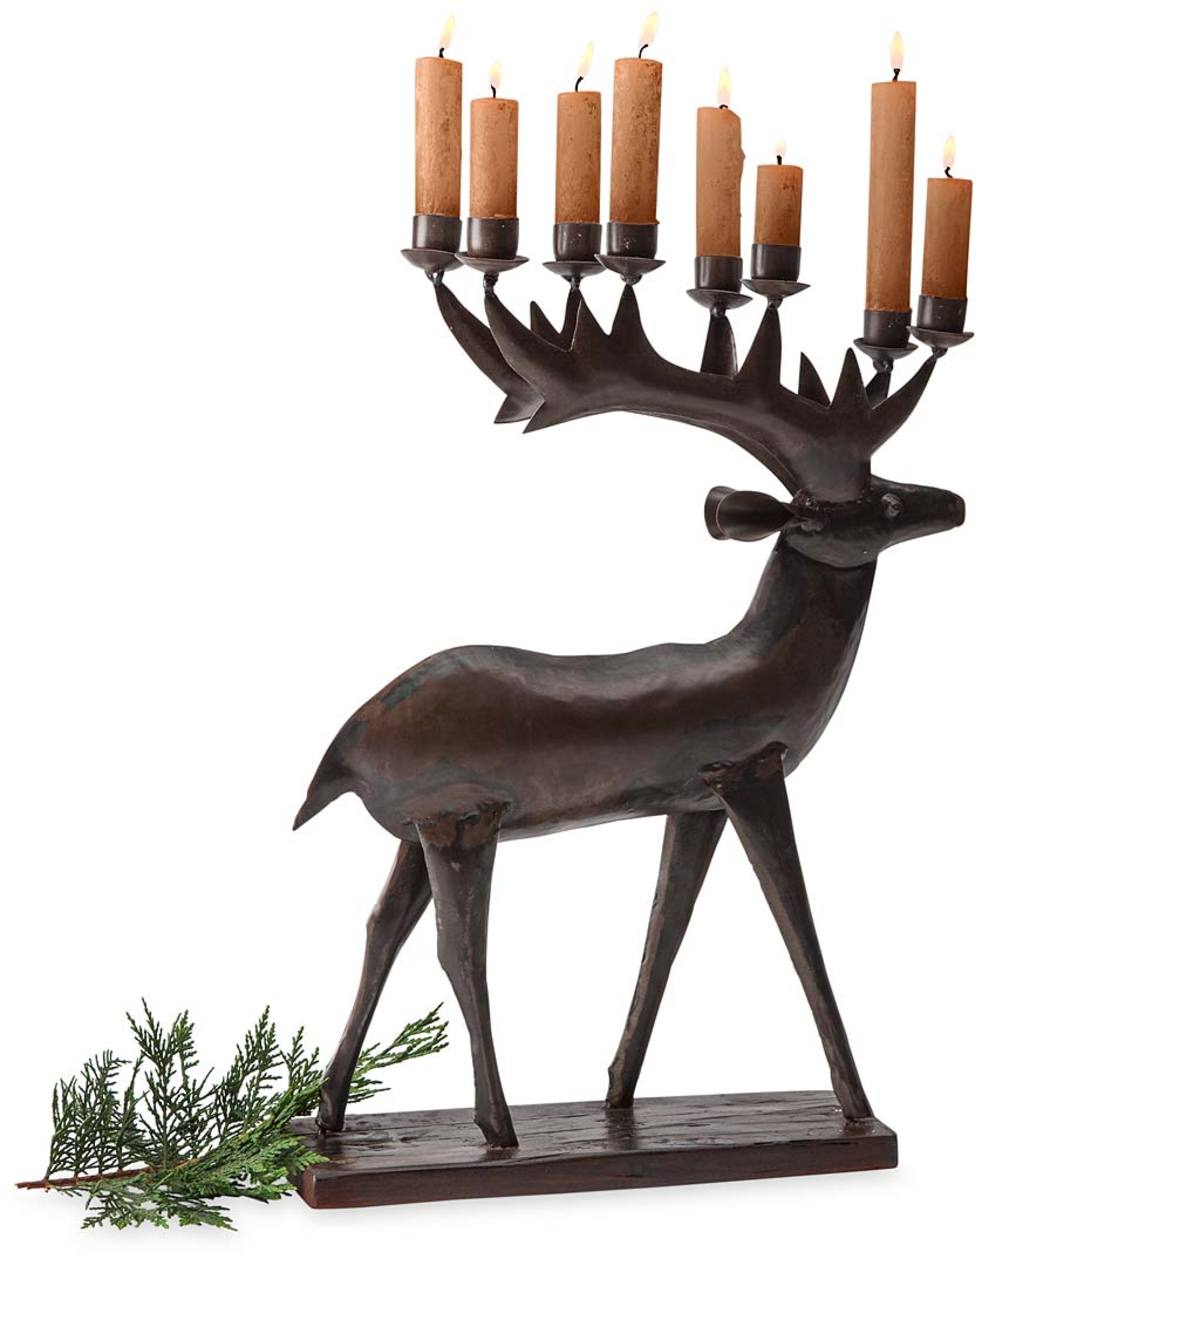 Rustic Metal Reindeer Candle Holders Christmas Decoration Tealights Novelty 